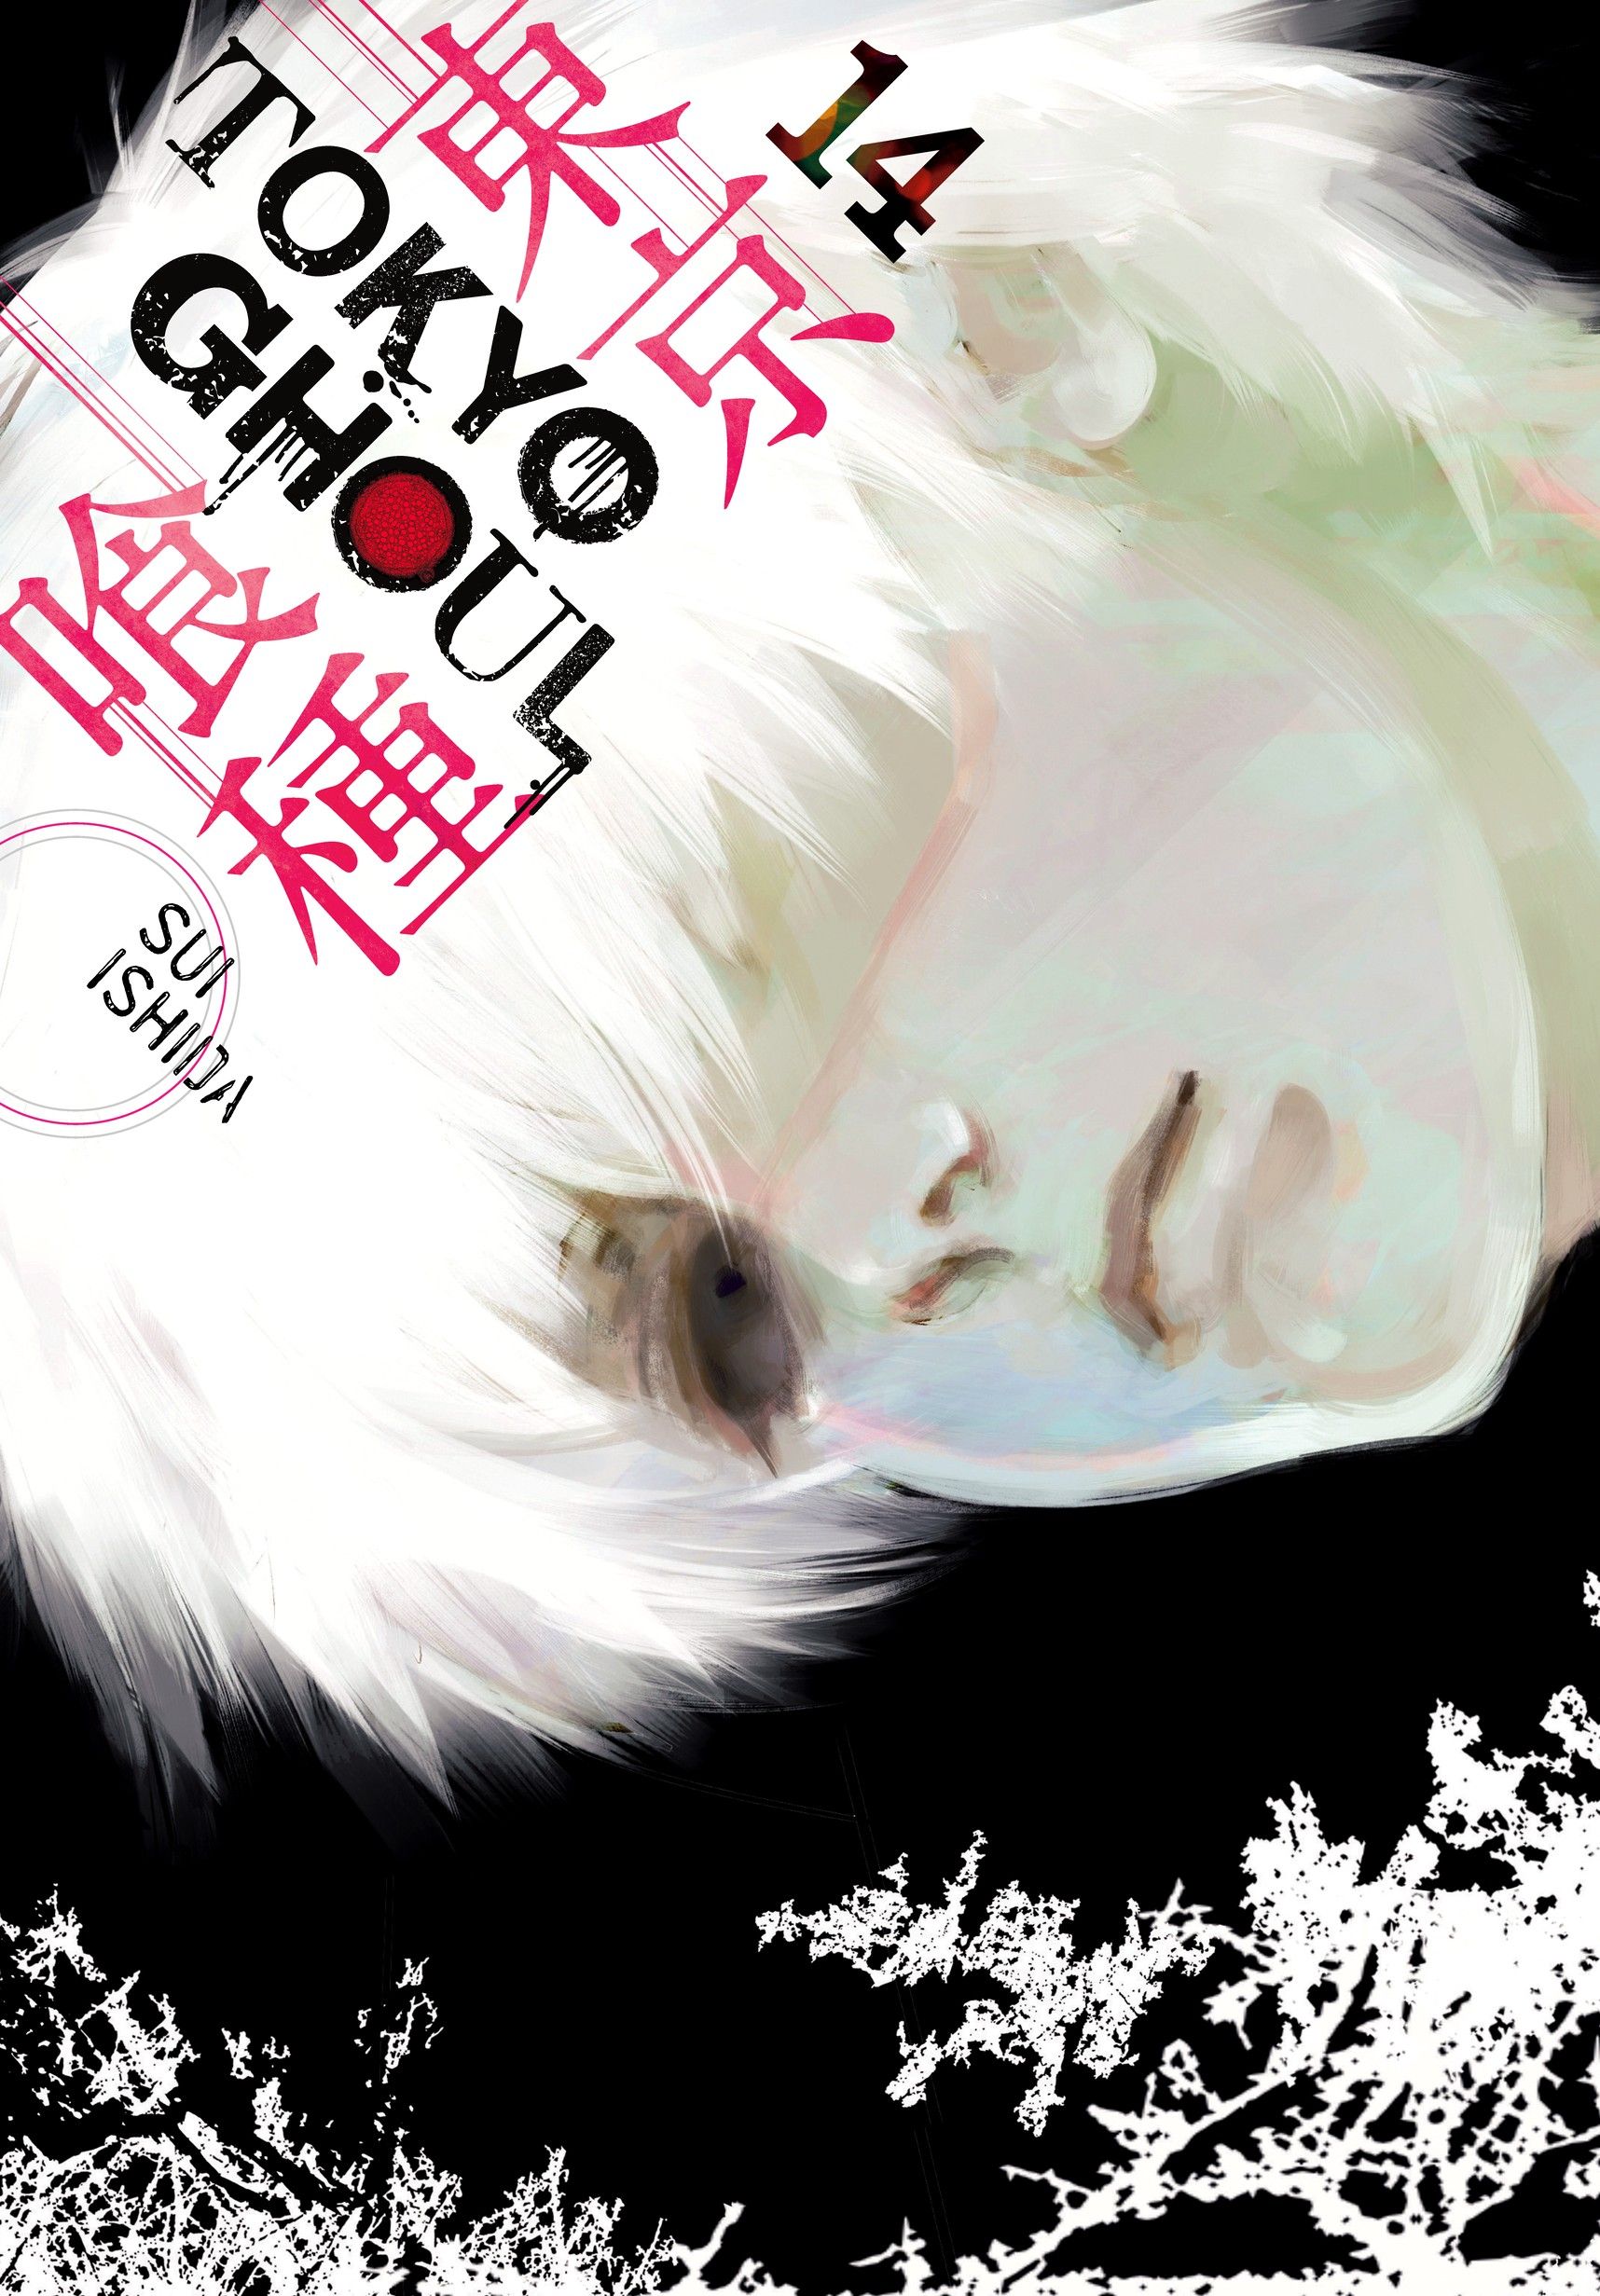 Tokyo Ghoul volume cover 14 featuring Kaneki